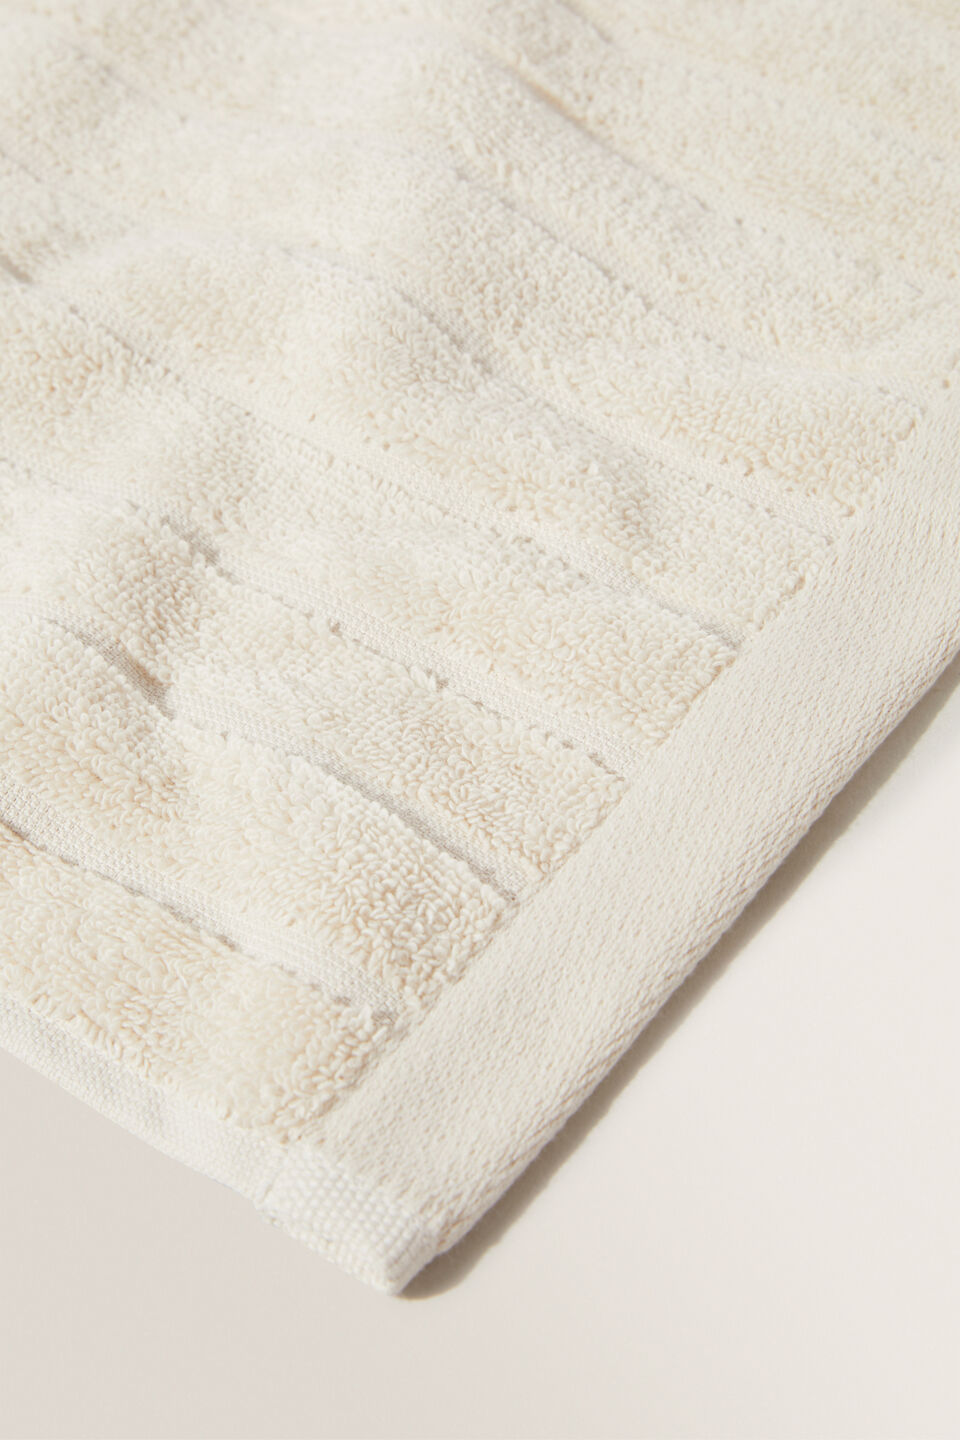 Cotton Stripe Face Towel  Ivory Cream